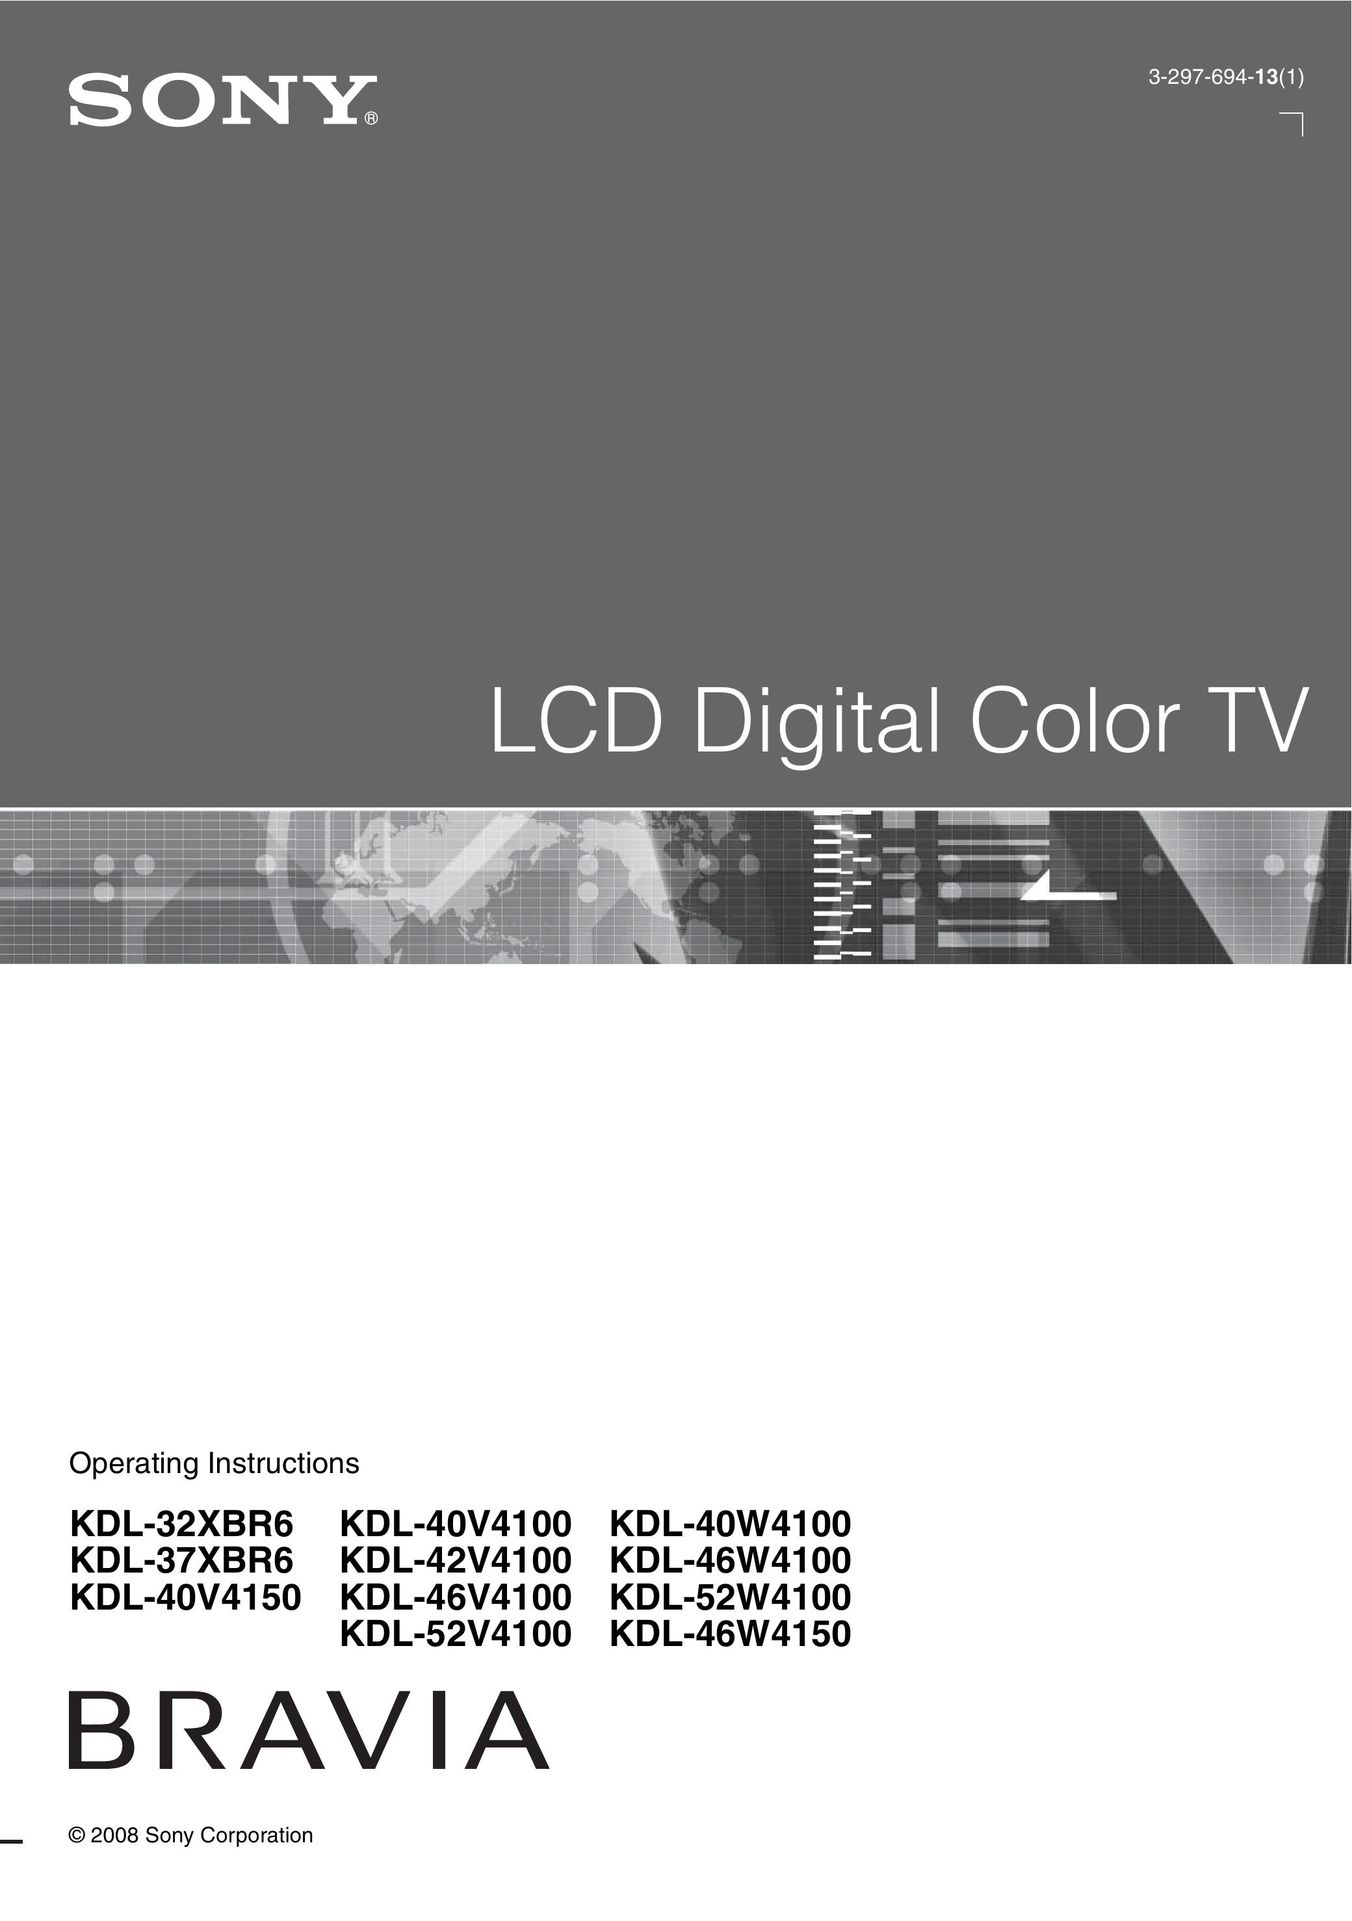 Sony KDL-46W4150 Beverage Dispenser User Manual